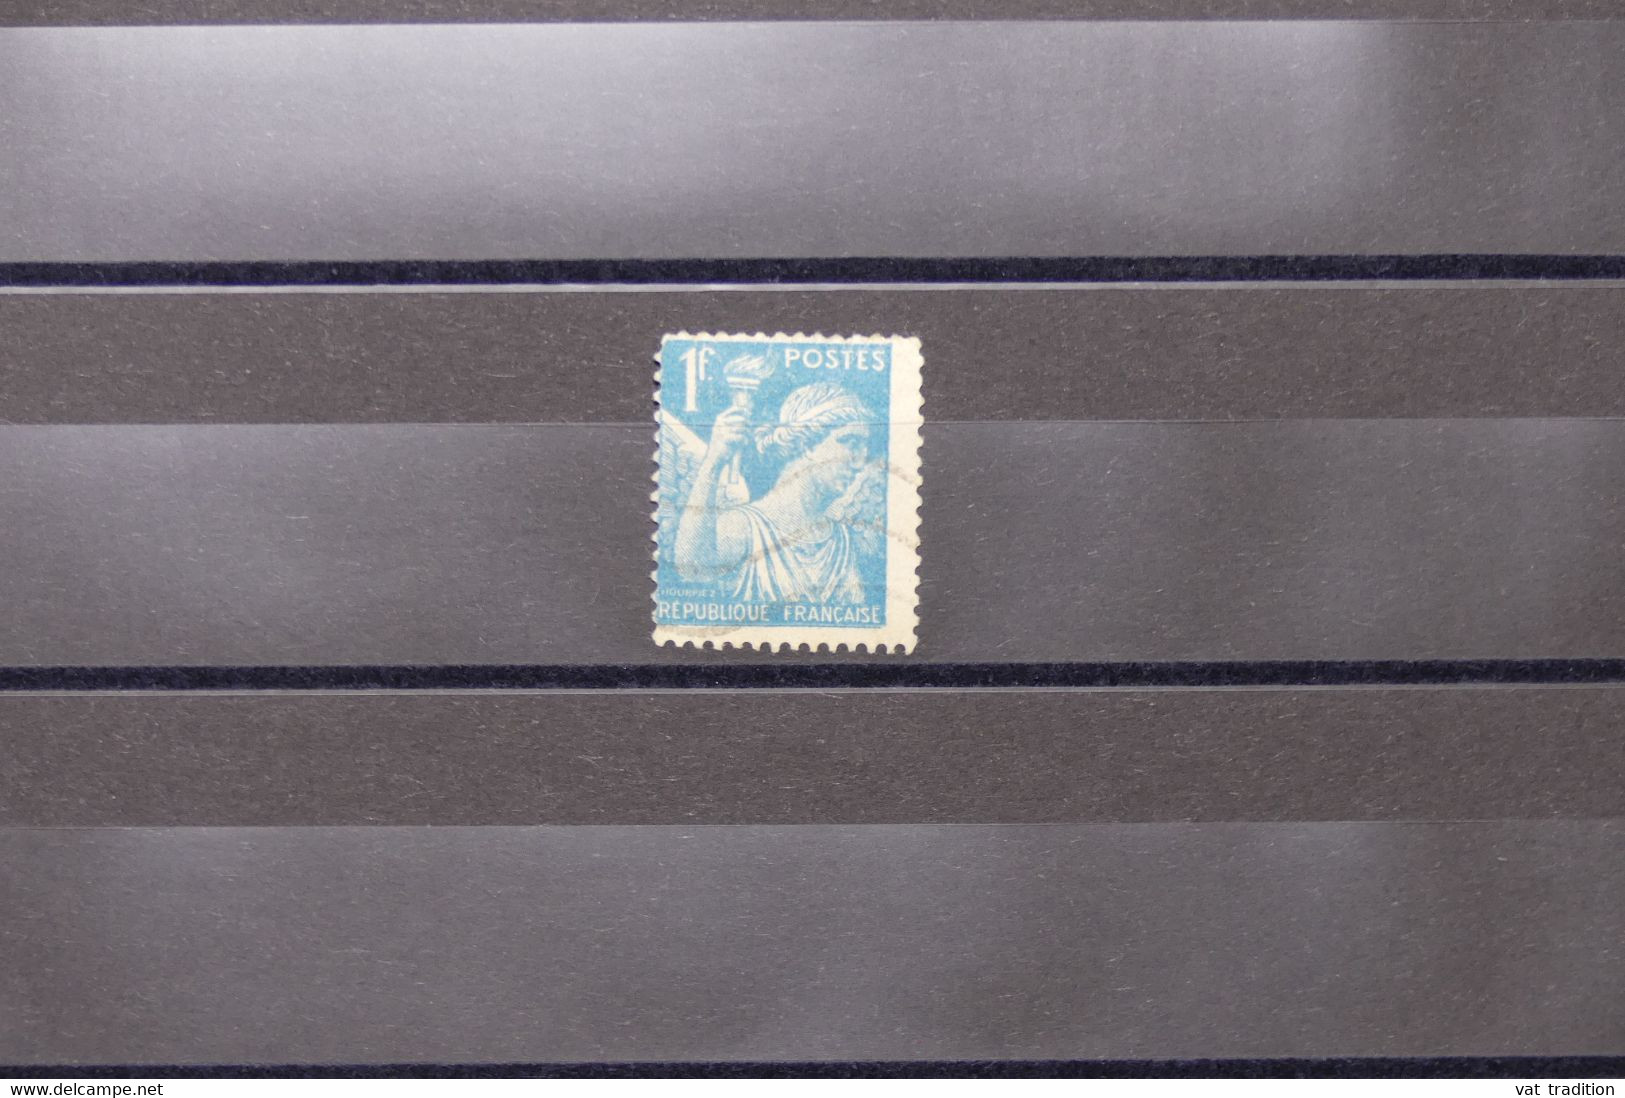 FRANCE - Variété - N° Yvert 650 - Type Iris - Papier Pelure - Oblitéré - L 74054 - Usados